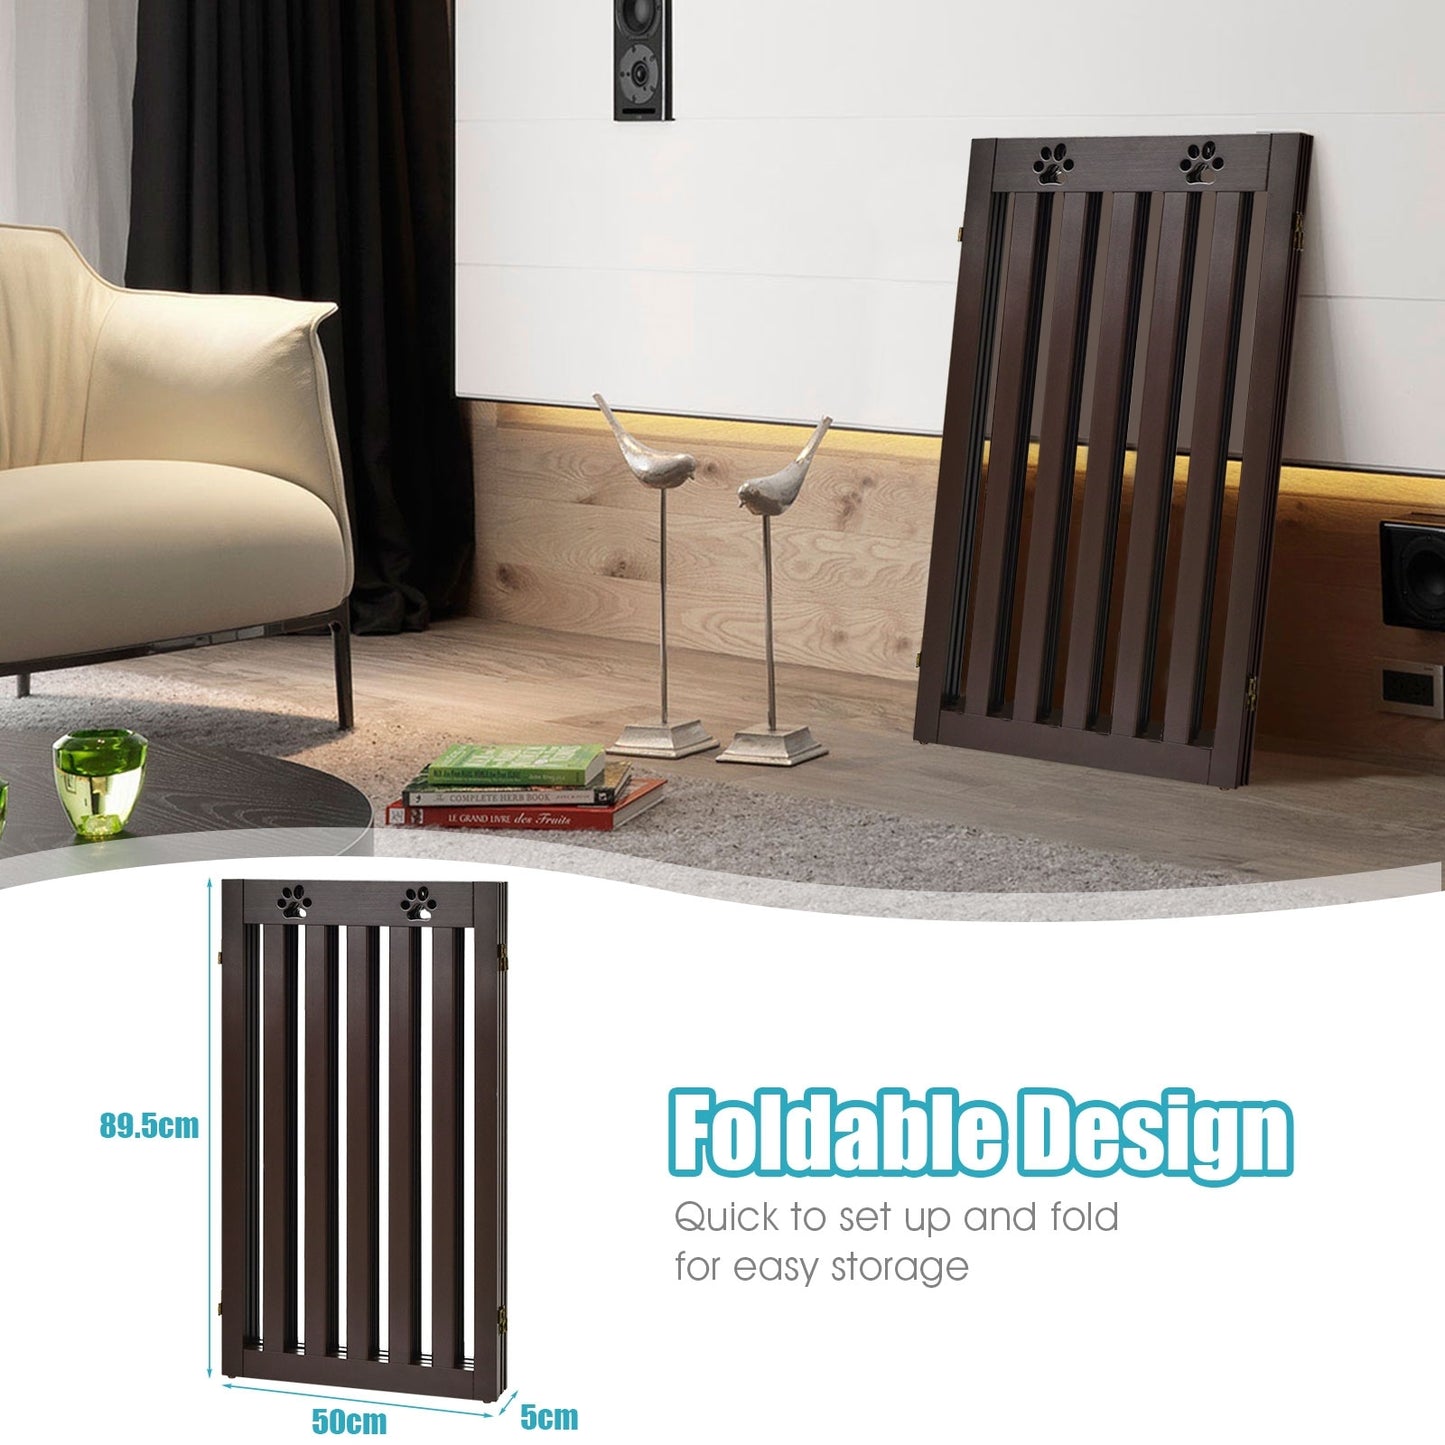 36 Inch Folding Wooden Freestanding Pet Gate Dog Gate with 360° Flexible Hinge-Dark Brown